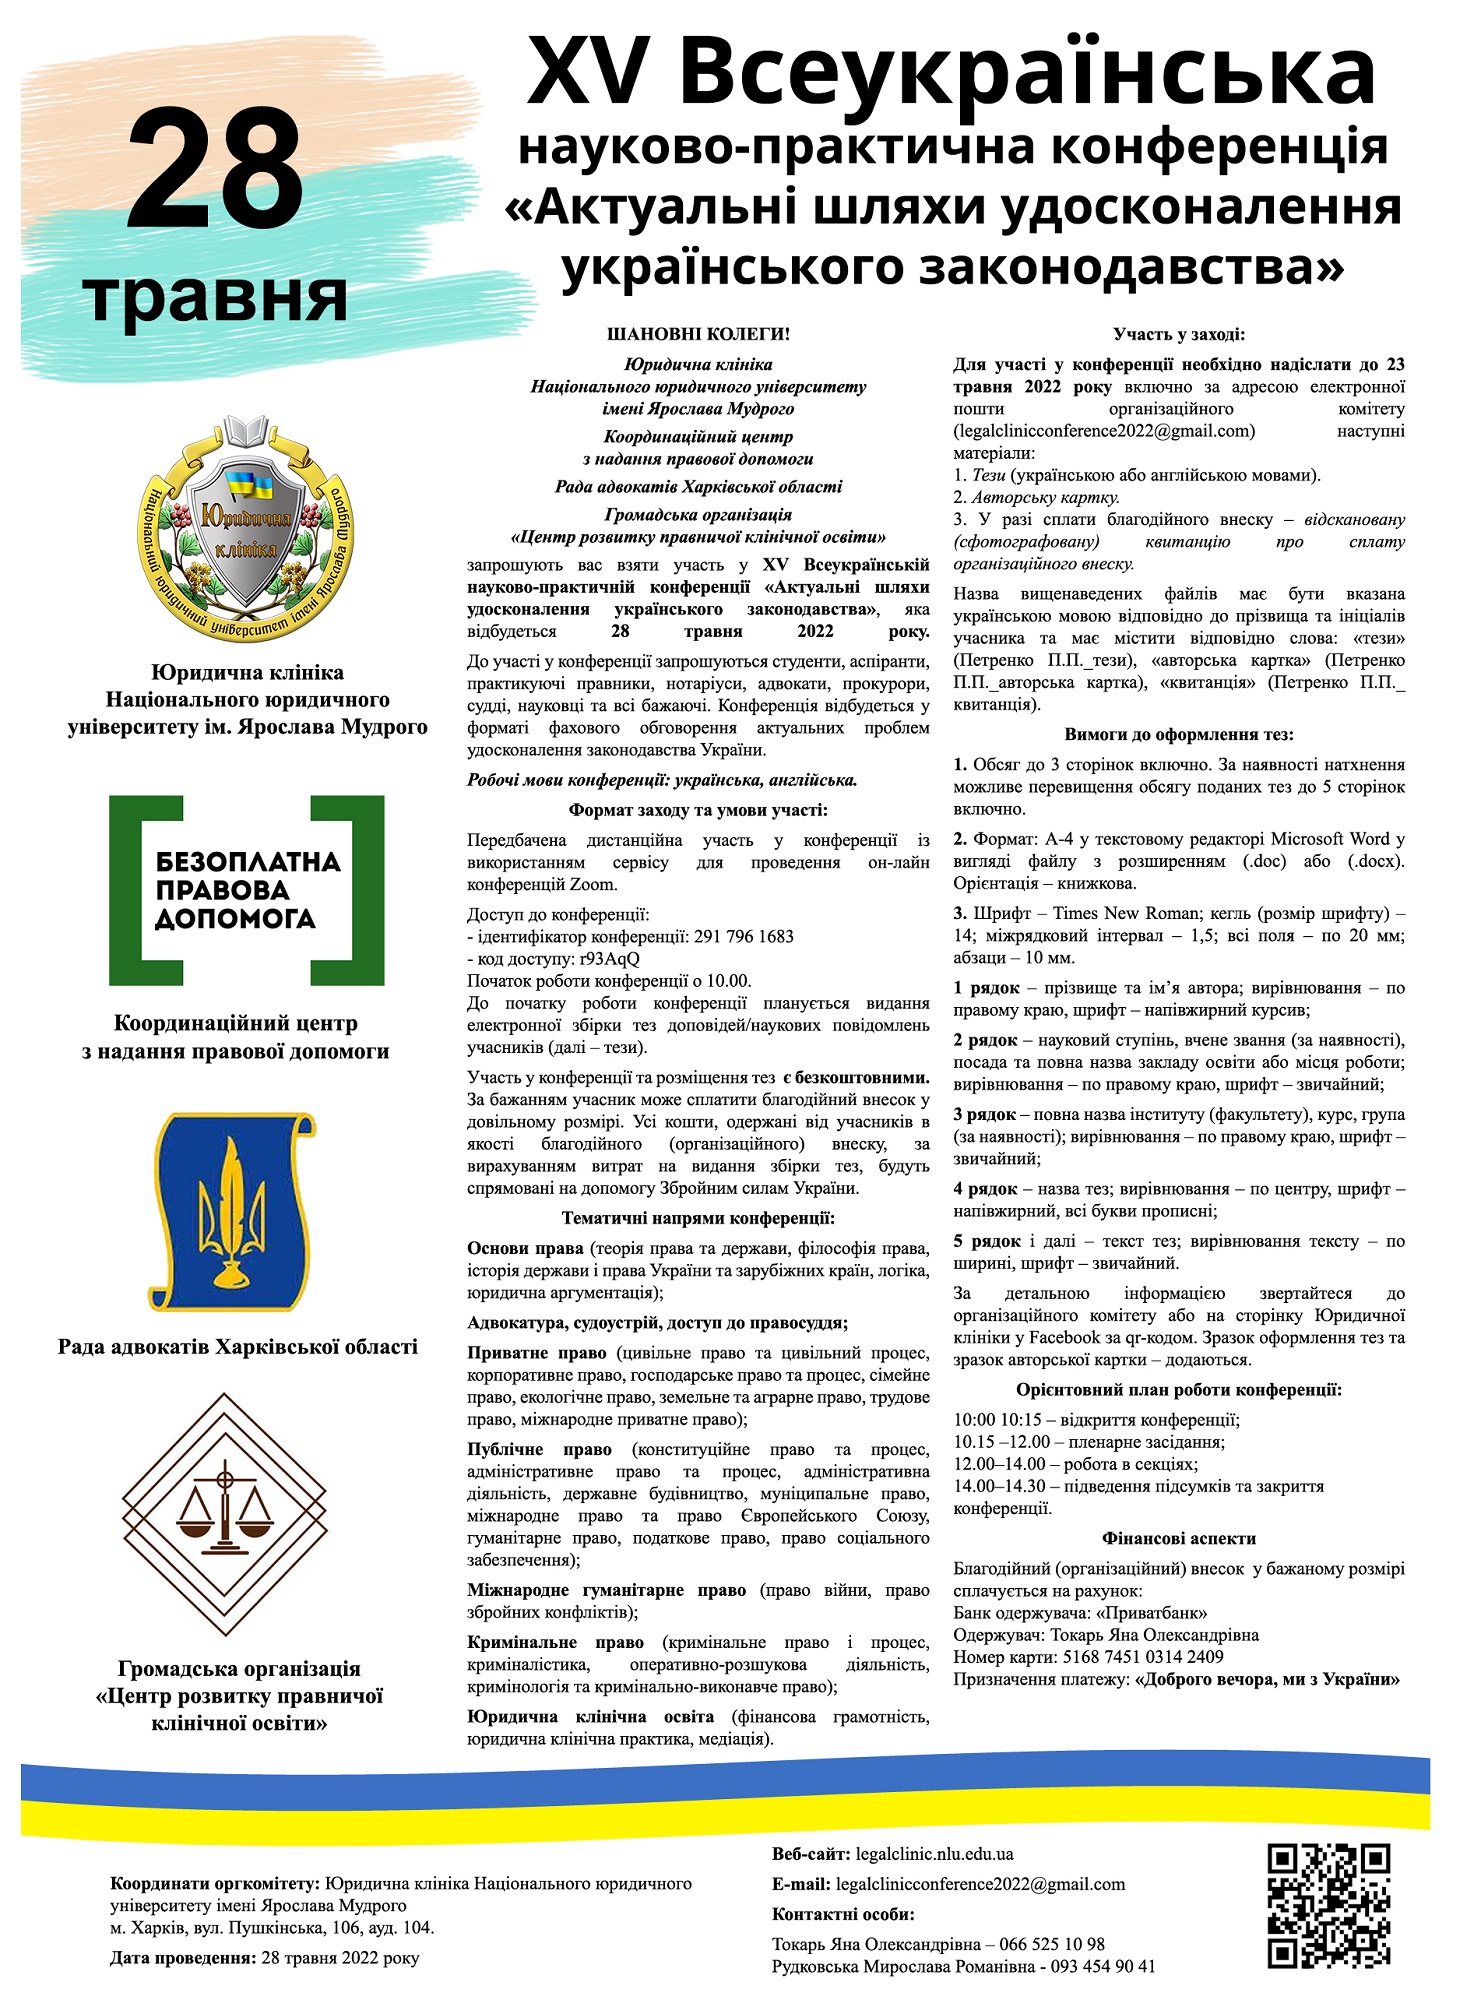 Всеукраїнська науково-практична конференція «Актуальні шляхи удосконалення українського законодавства»